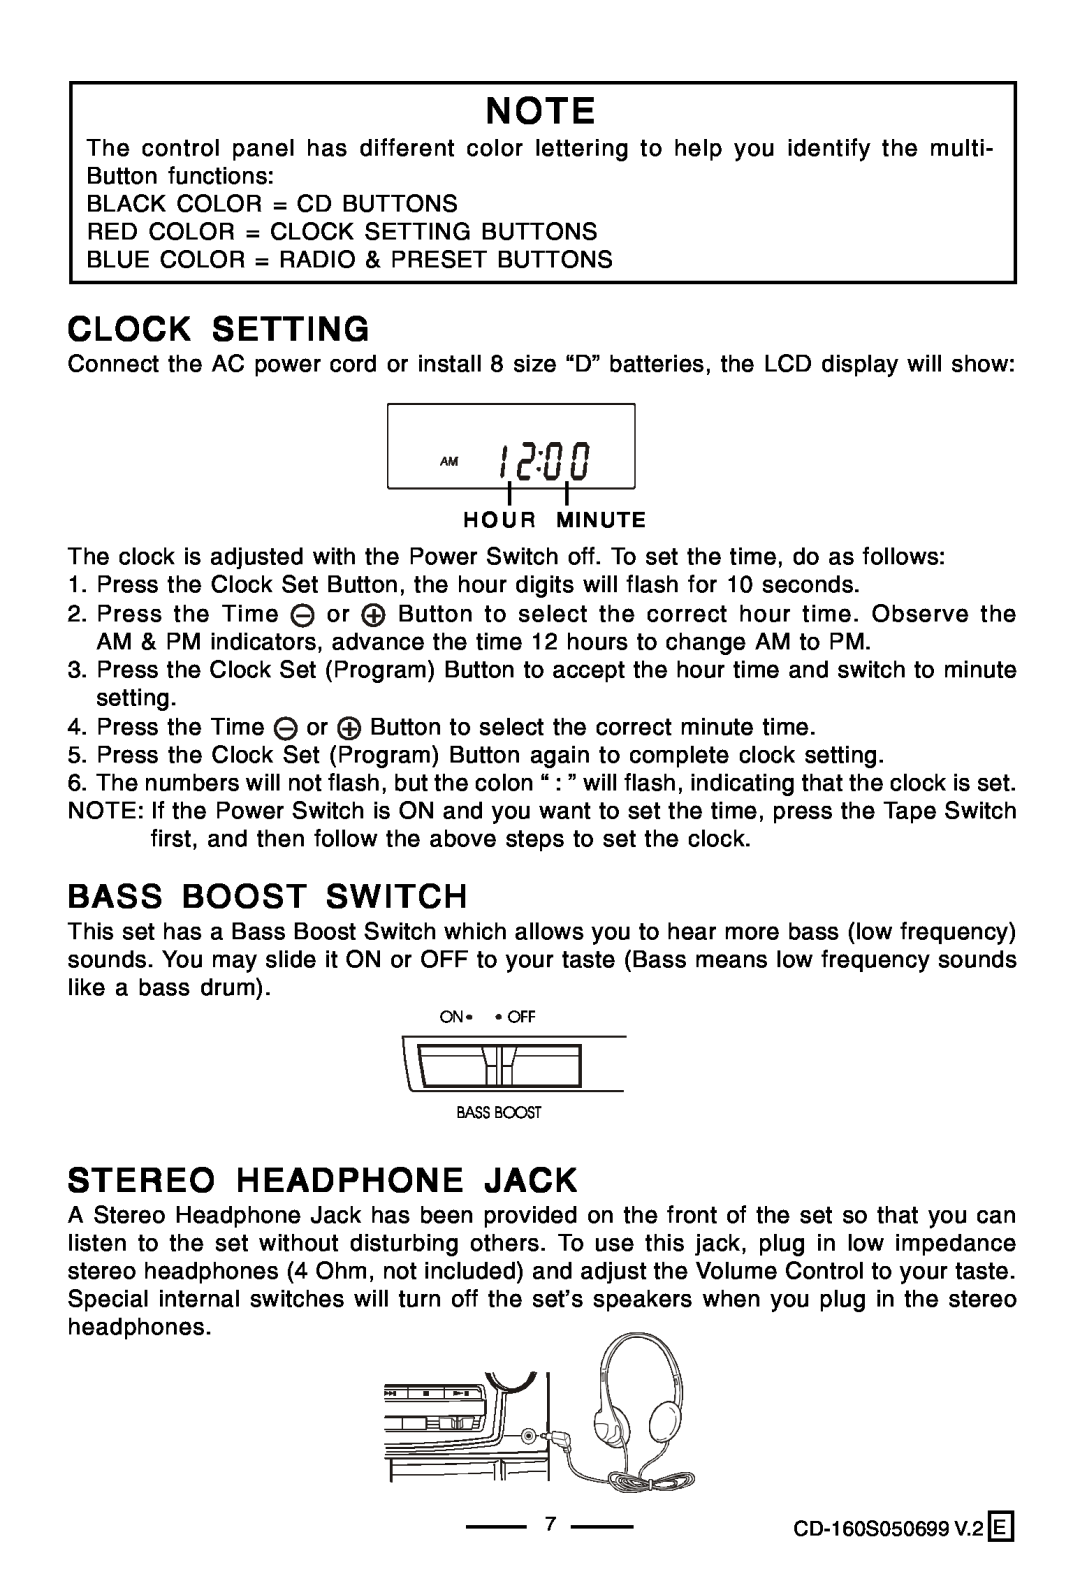 Lenoxx Electronics CD-160 manual Clock Setting, Bass Boost Switch, Stereo Headphone Jack 